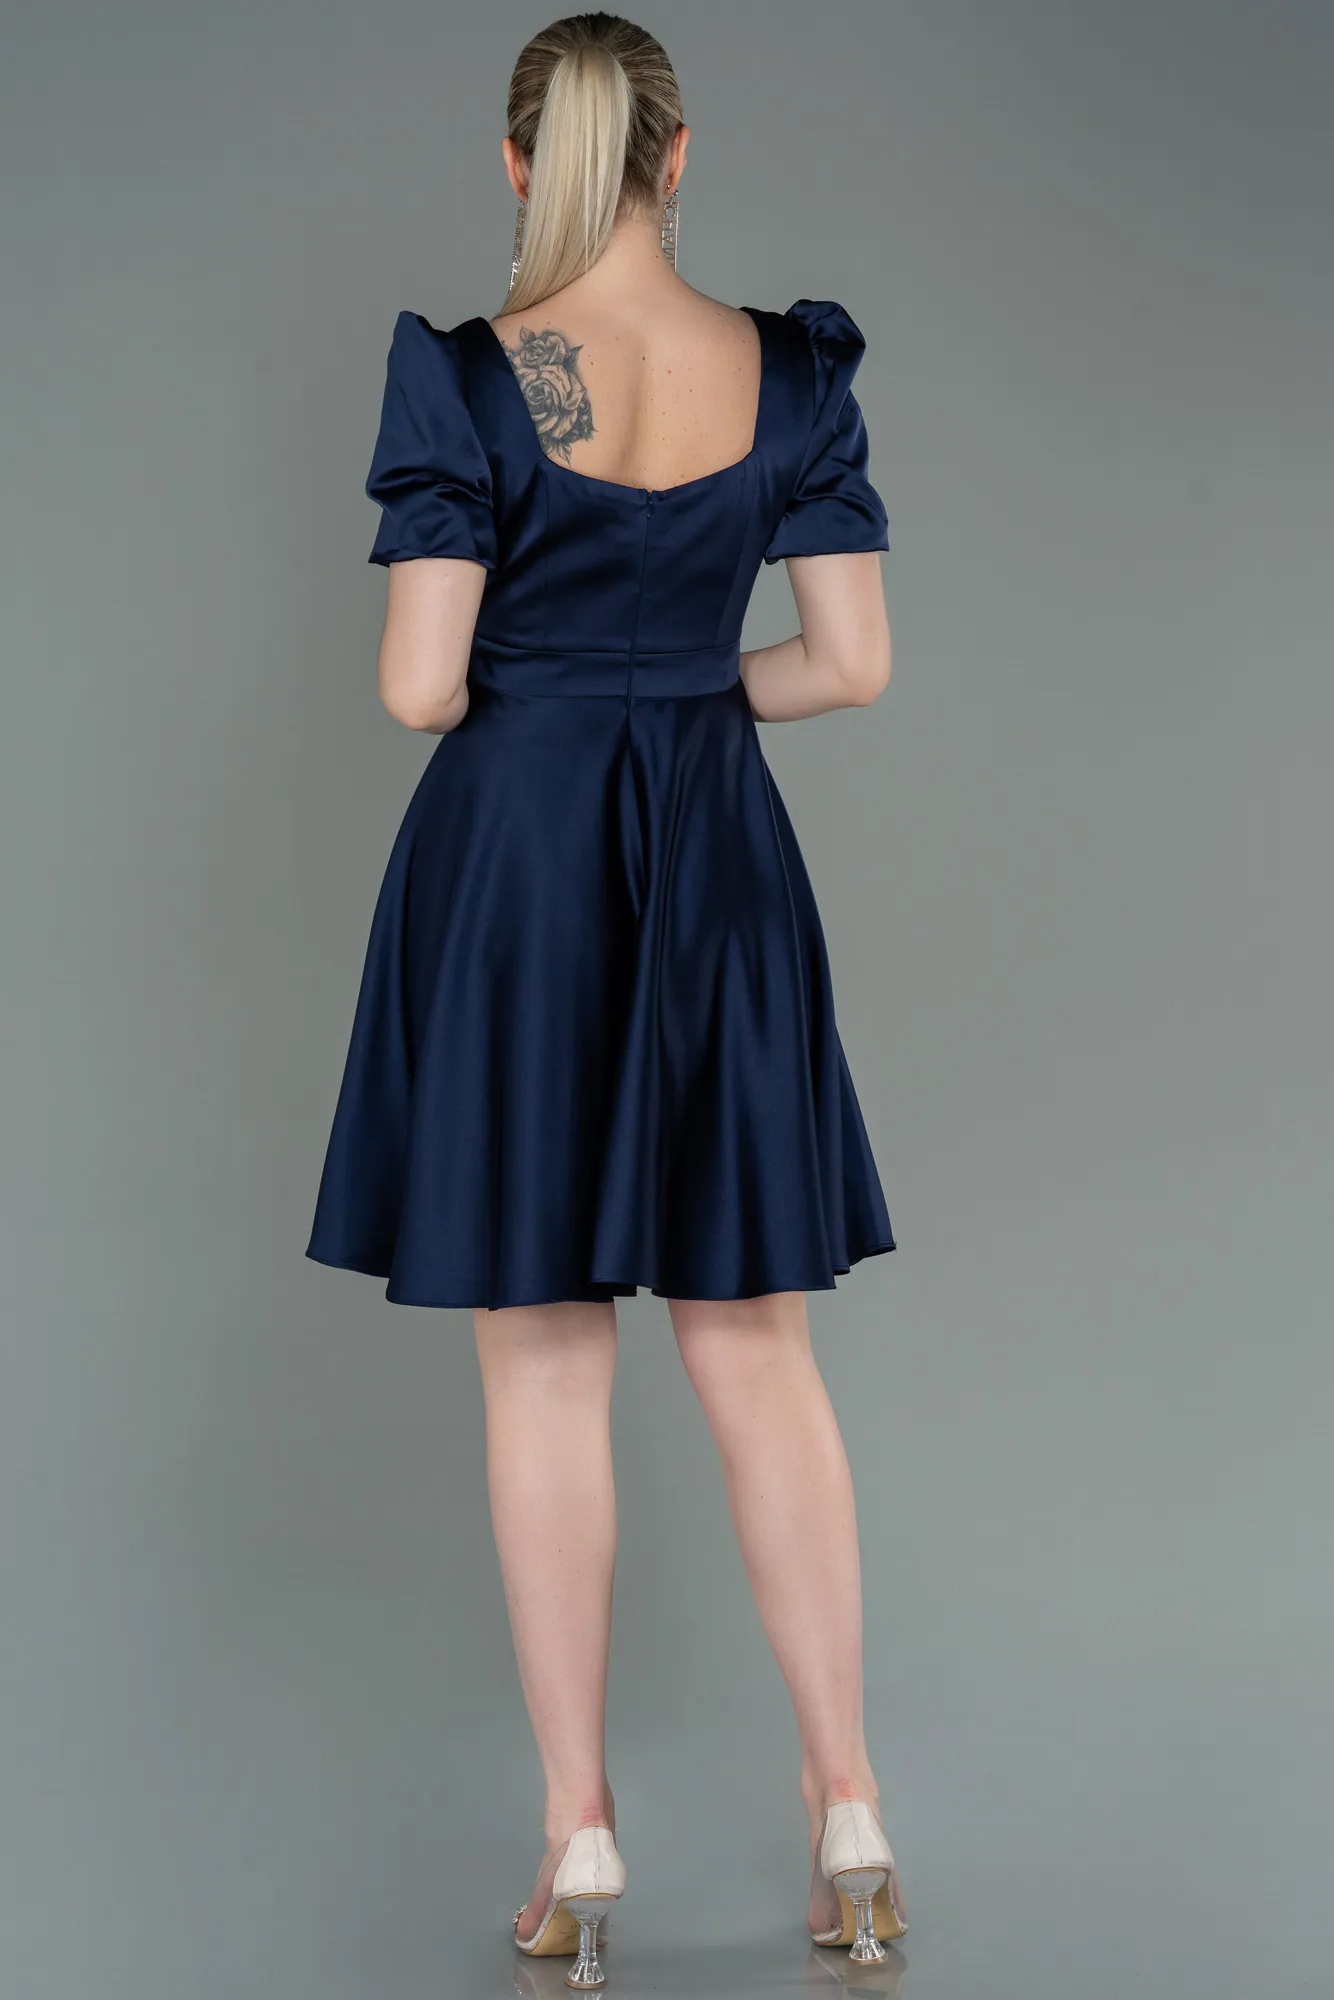 Navy Blue-Short Satin Invitation Dress ABK1792